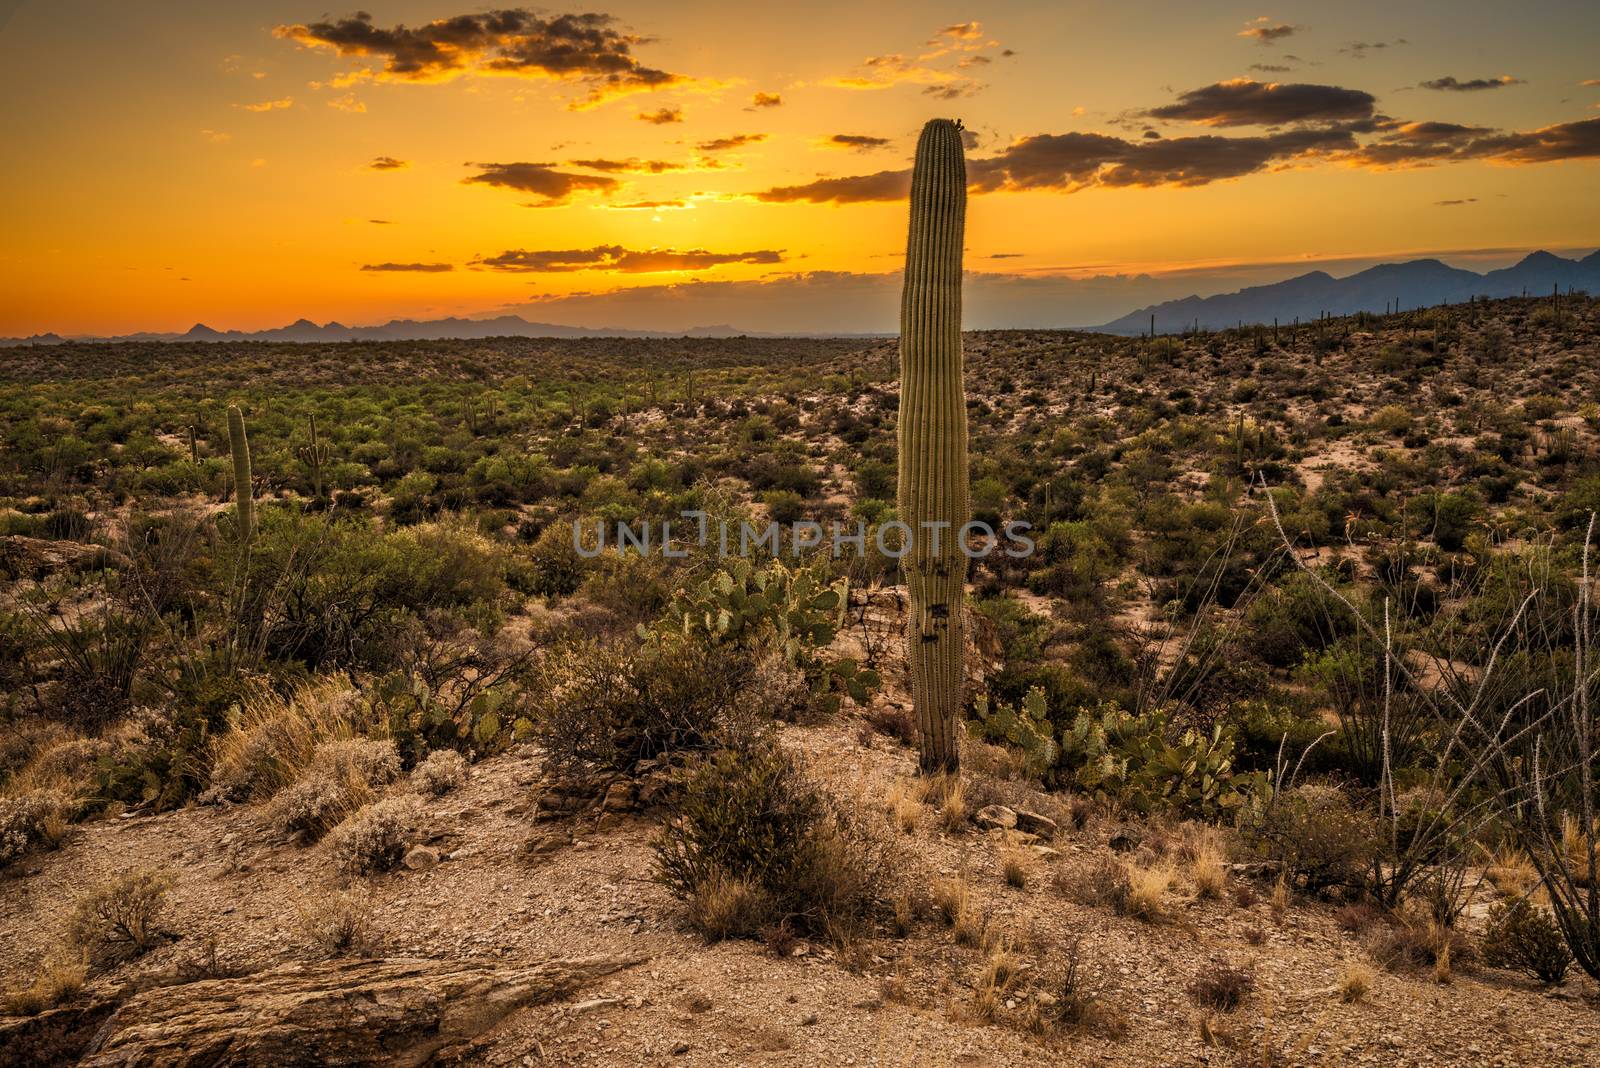 Sunset over Saguaro National Park by nickfox